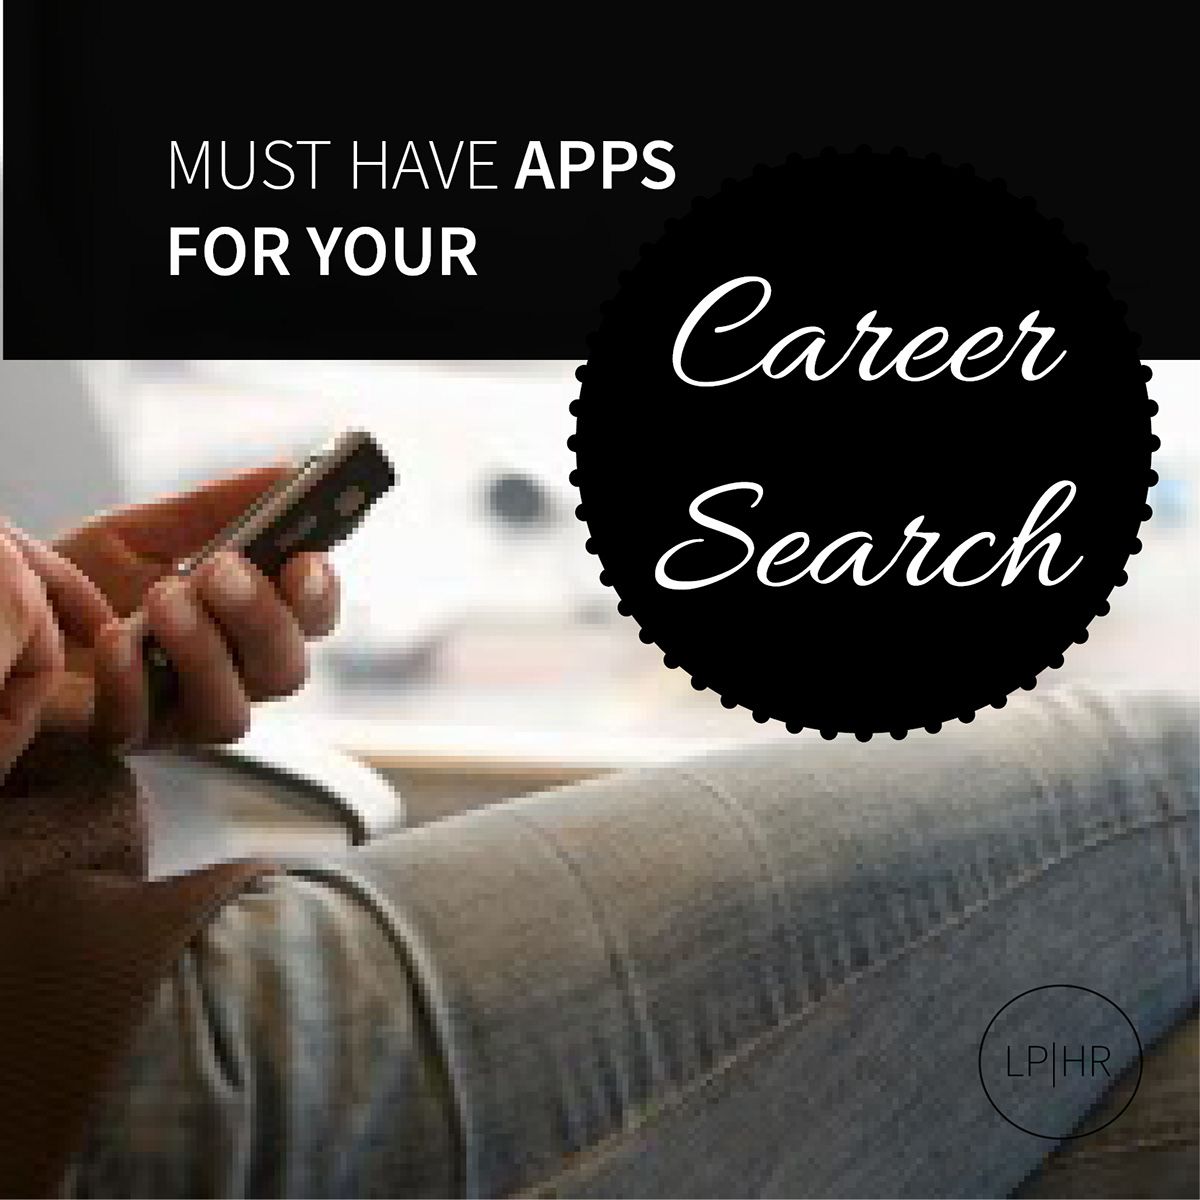 career search cover letter CV download freebies job seekers marketing   pdf Resume samples starter kit templates lphr